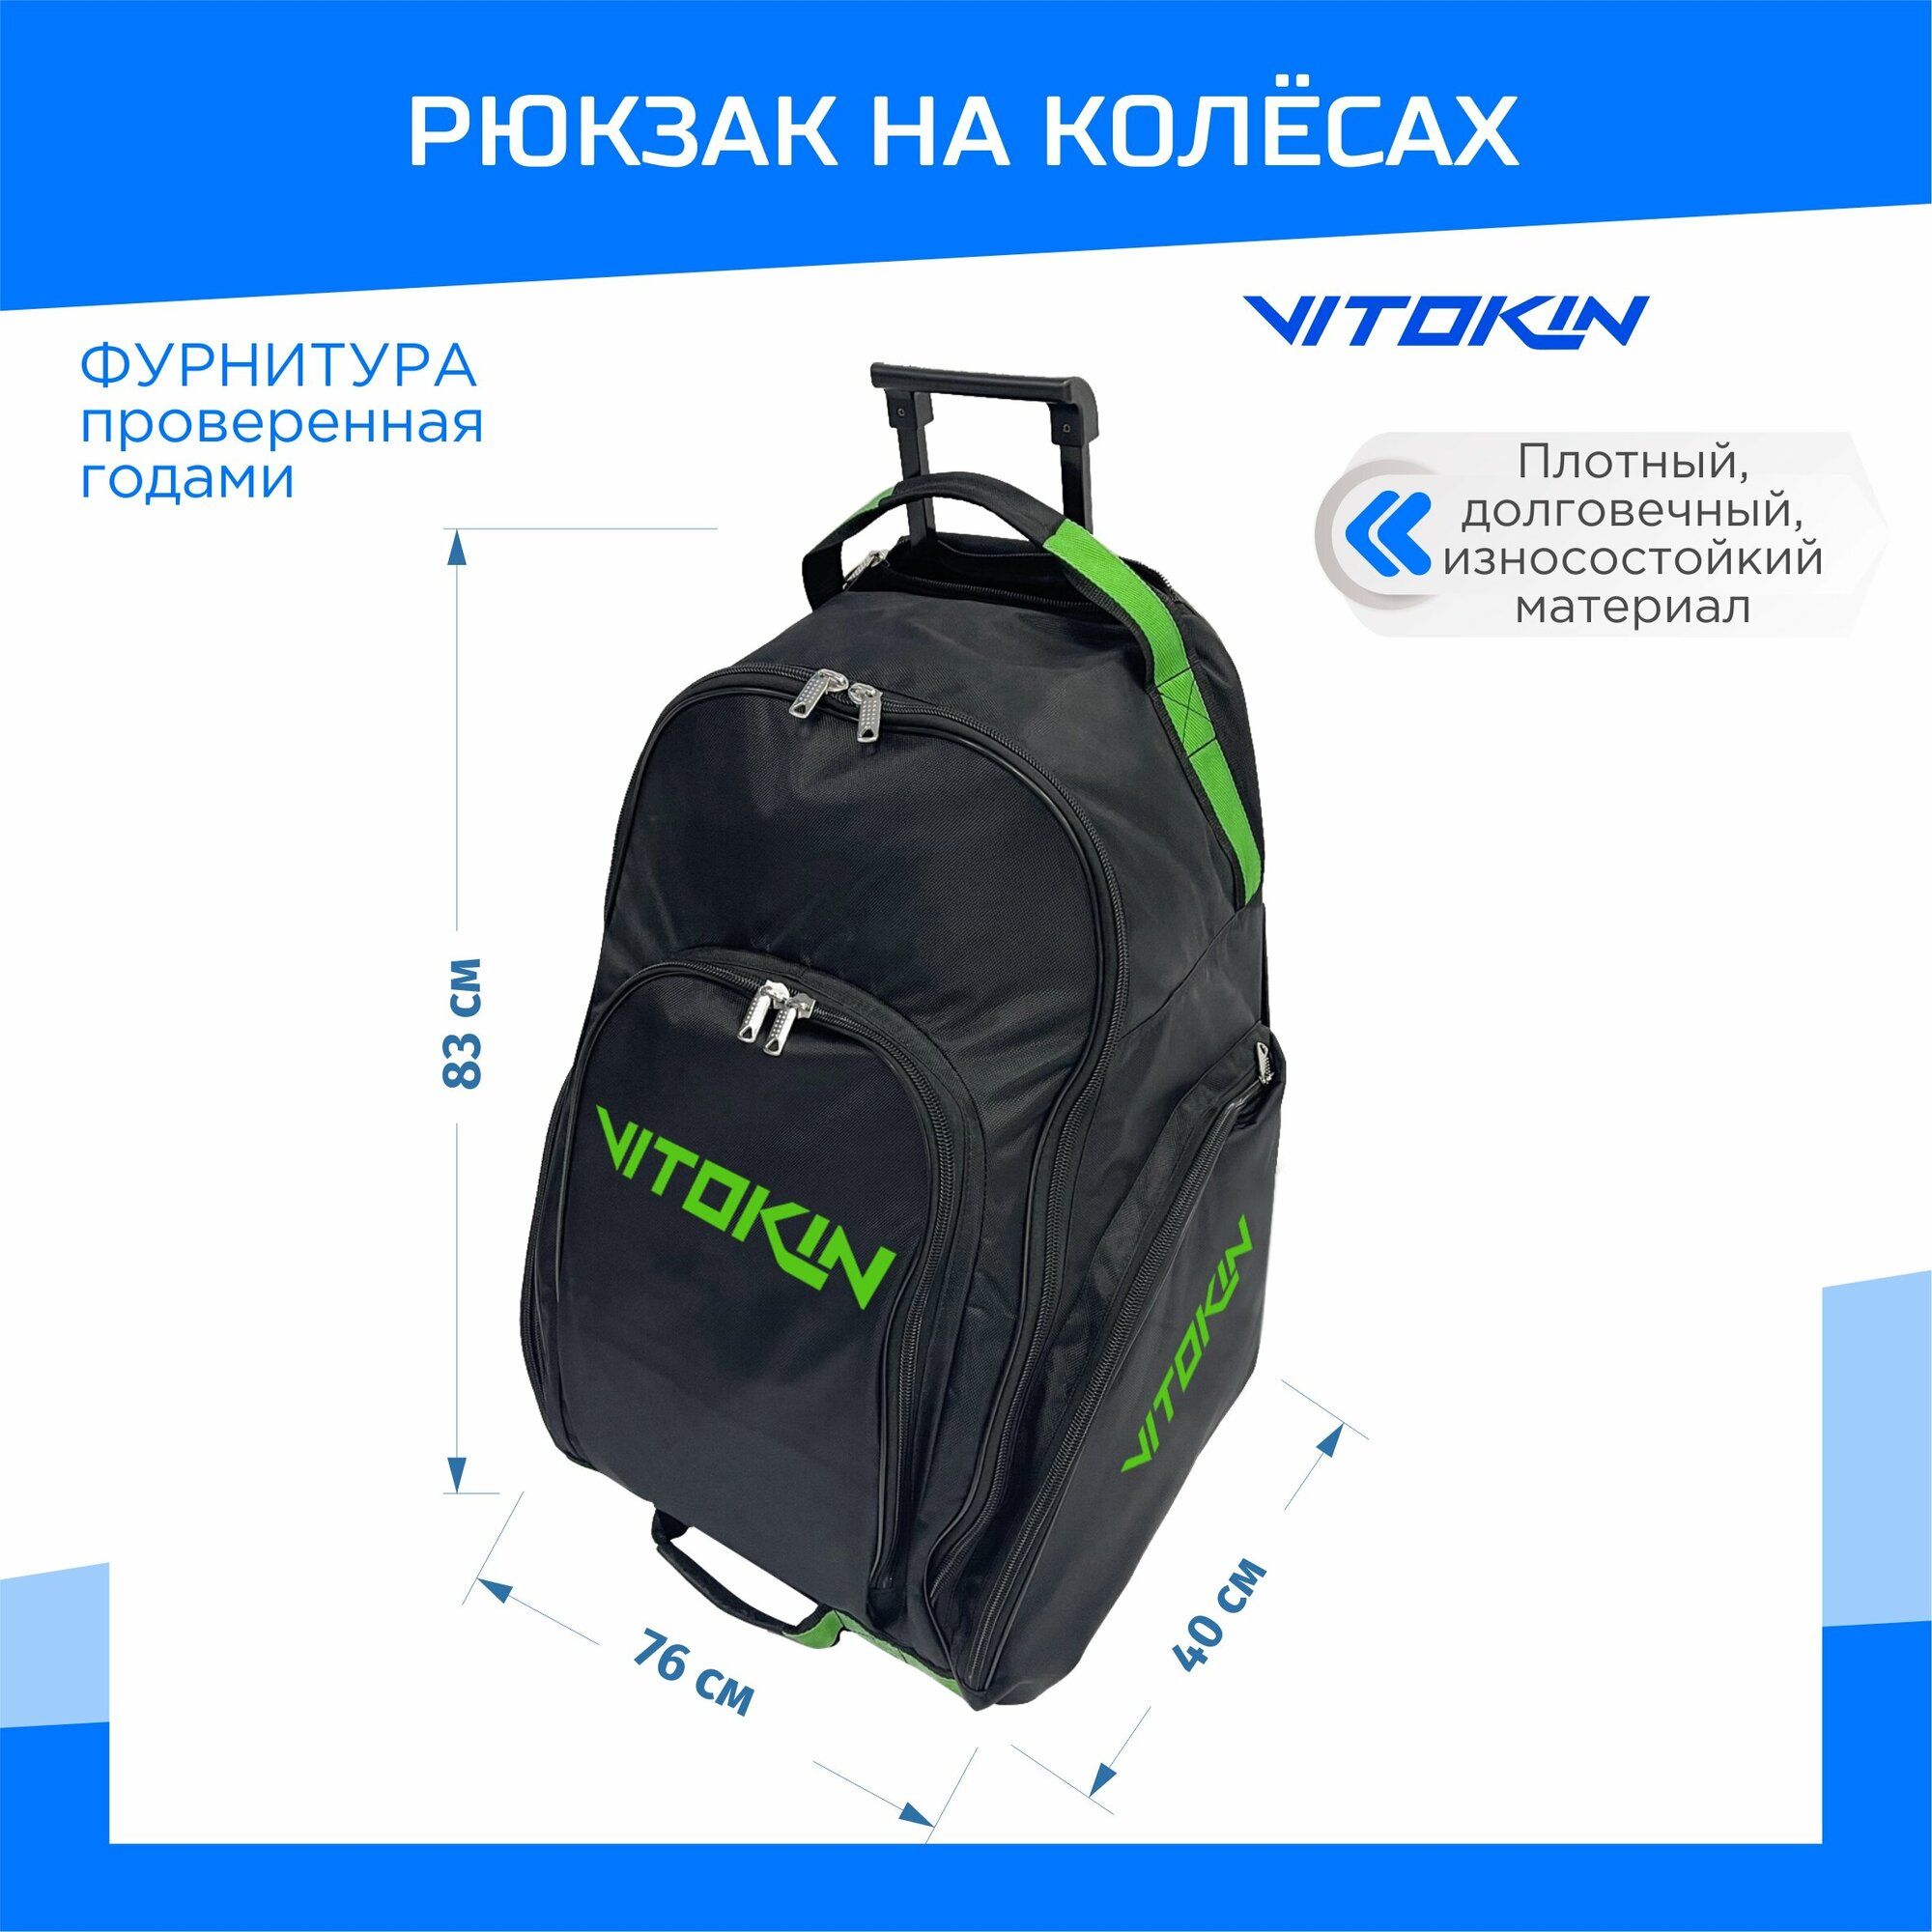 Сумка спортивная сумка-рюкзак Vitokin 25645 